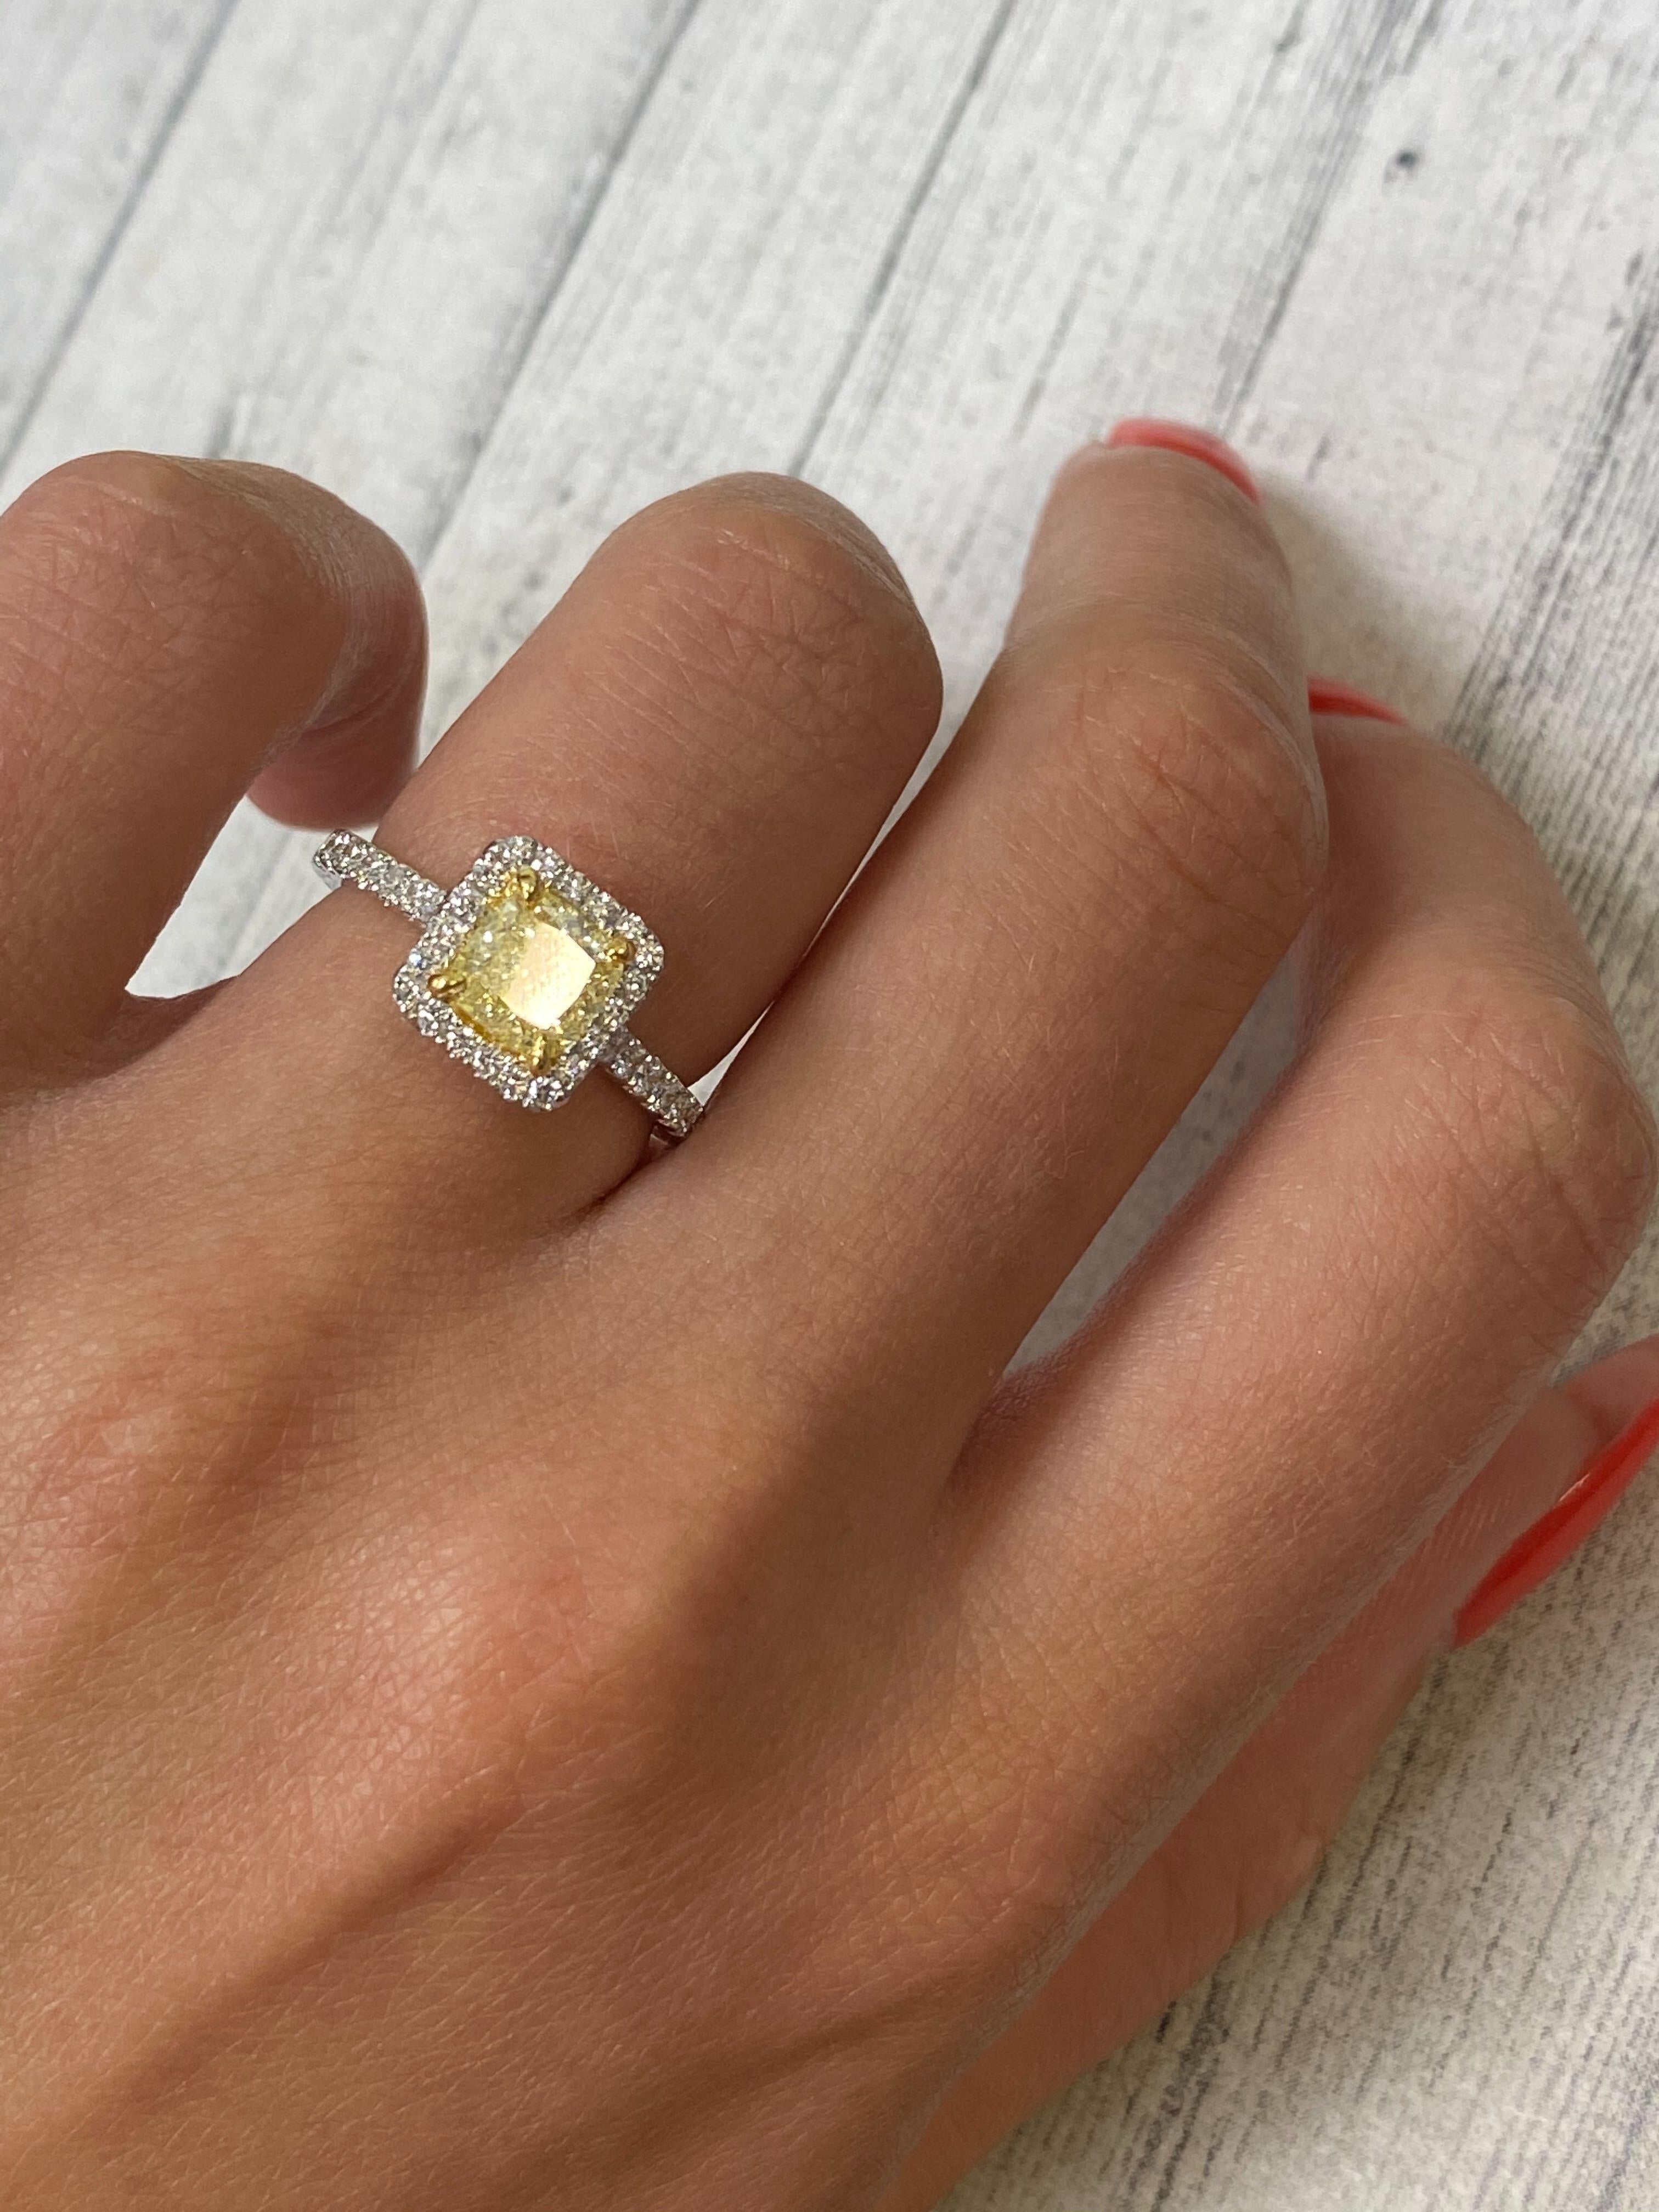 Rachel Koen 18 Karat White Gold Fancy Yellow Diamond Ring with Halo 1.36 Carat 1